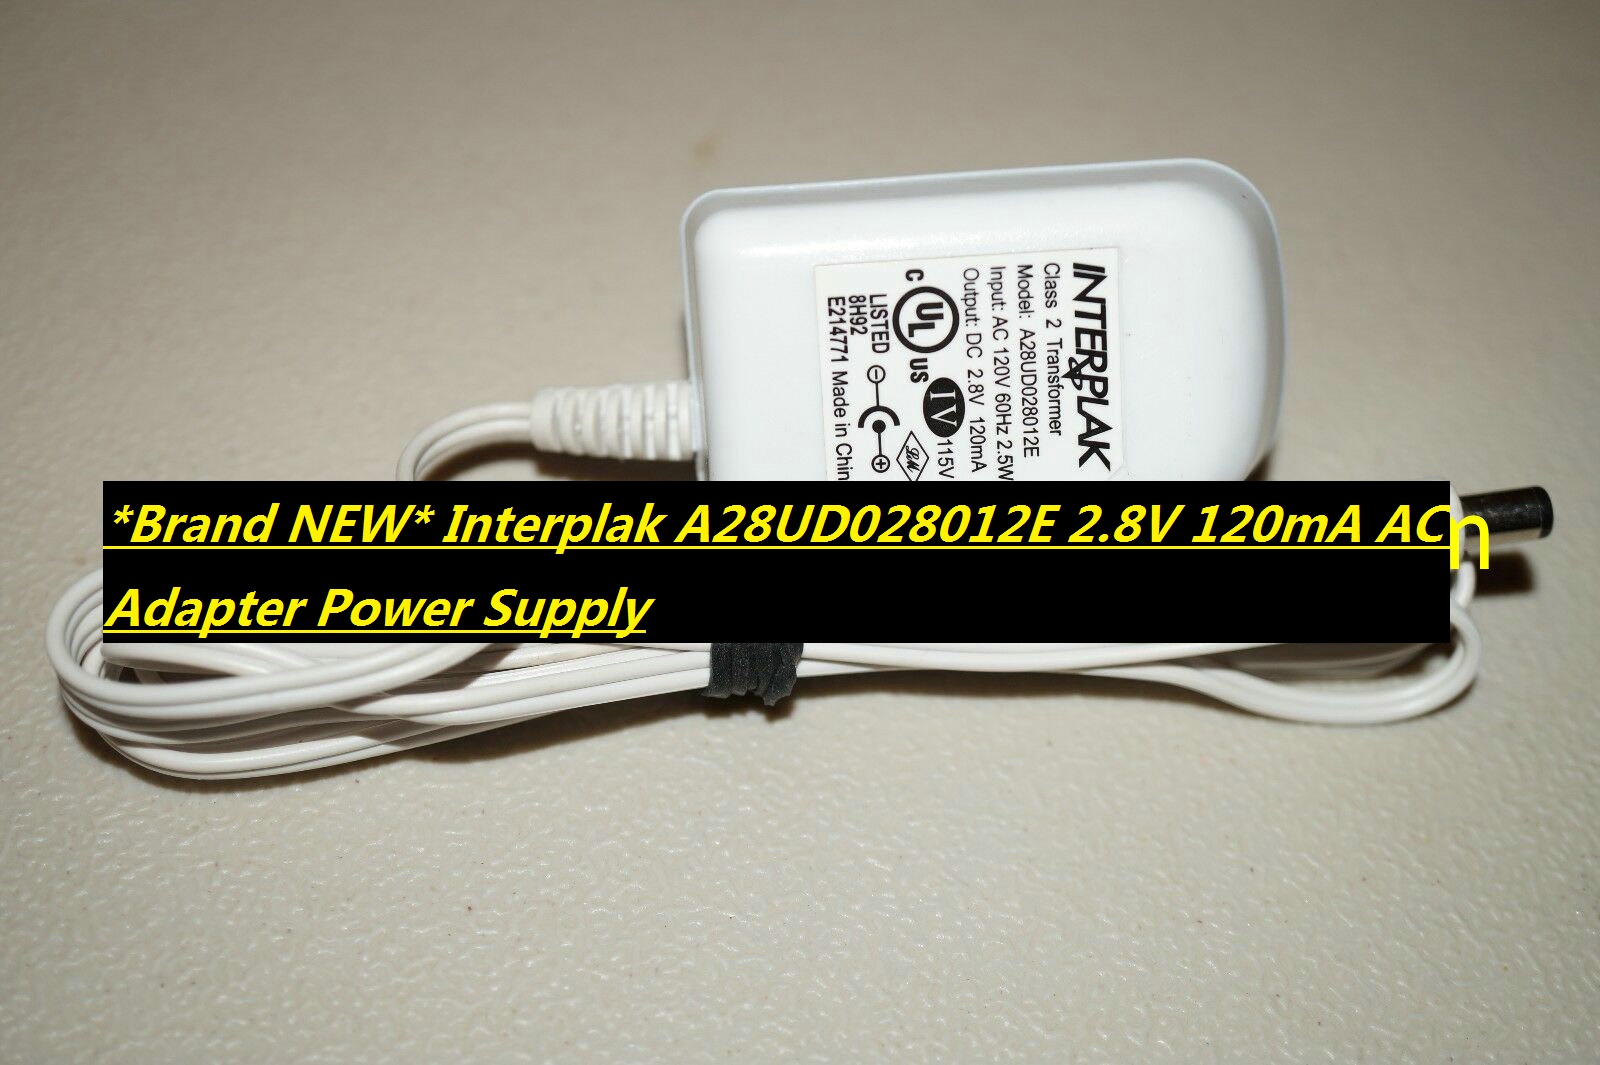 *Brand NEW* Interplak A28UD028012E 2.8V 120mA AC Adapter Power Supply - Click Image to Close